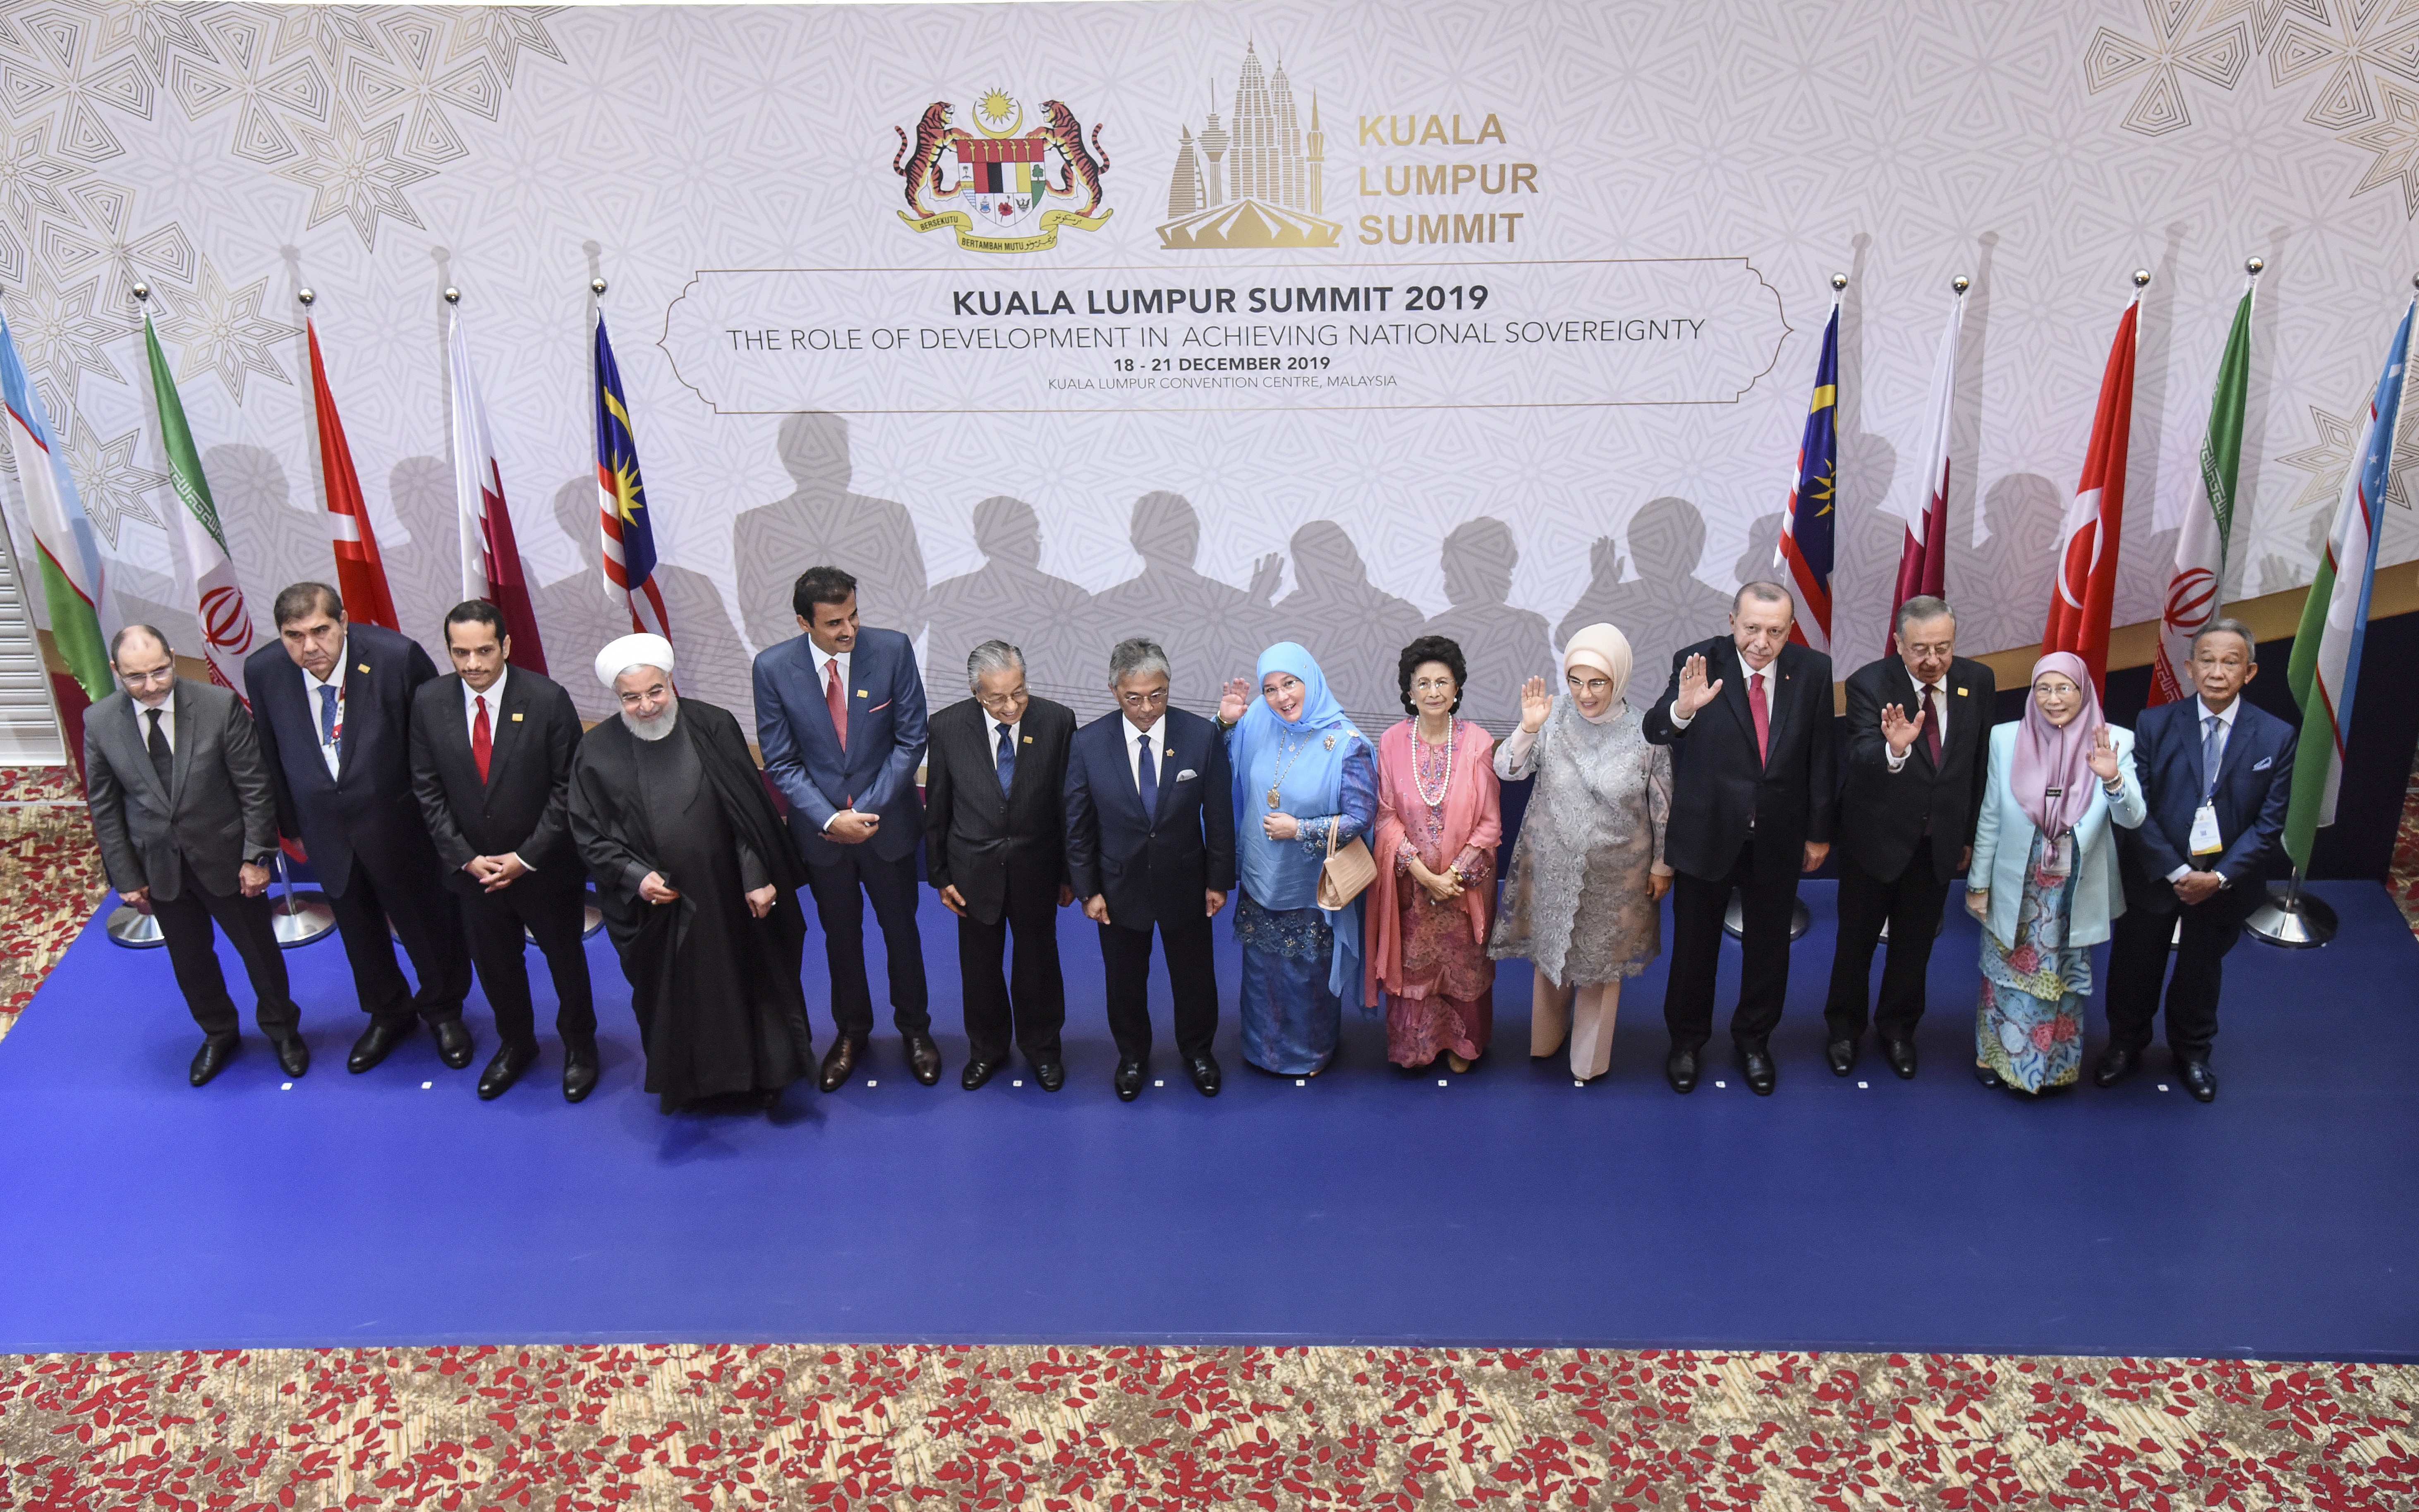 Delegates at the Kuala Lumpur Summit 2019. Photo: EPA-EFE